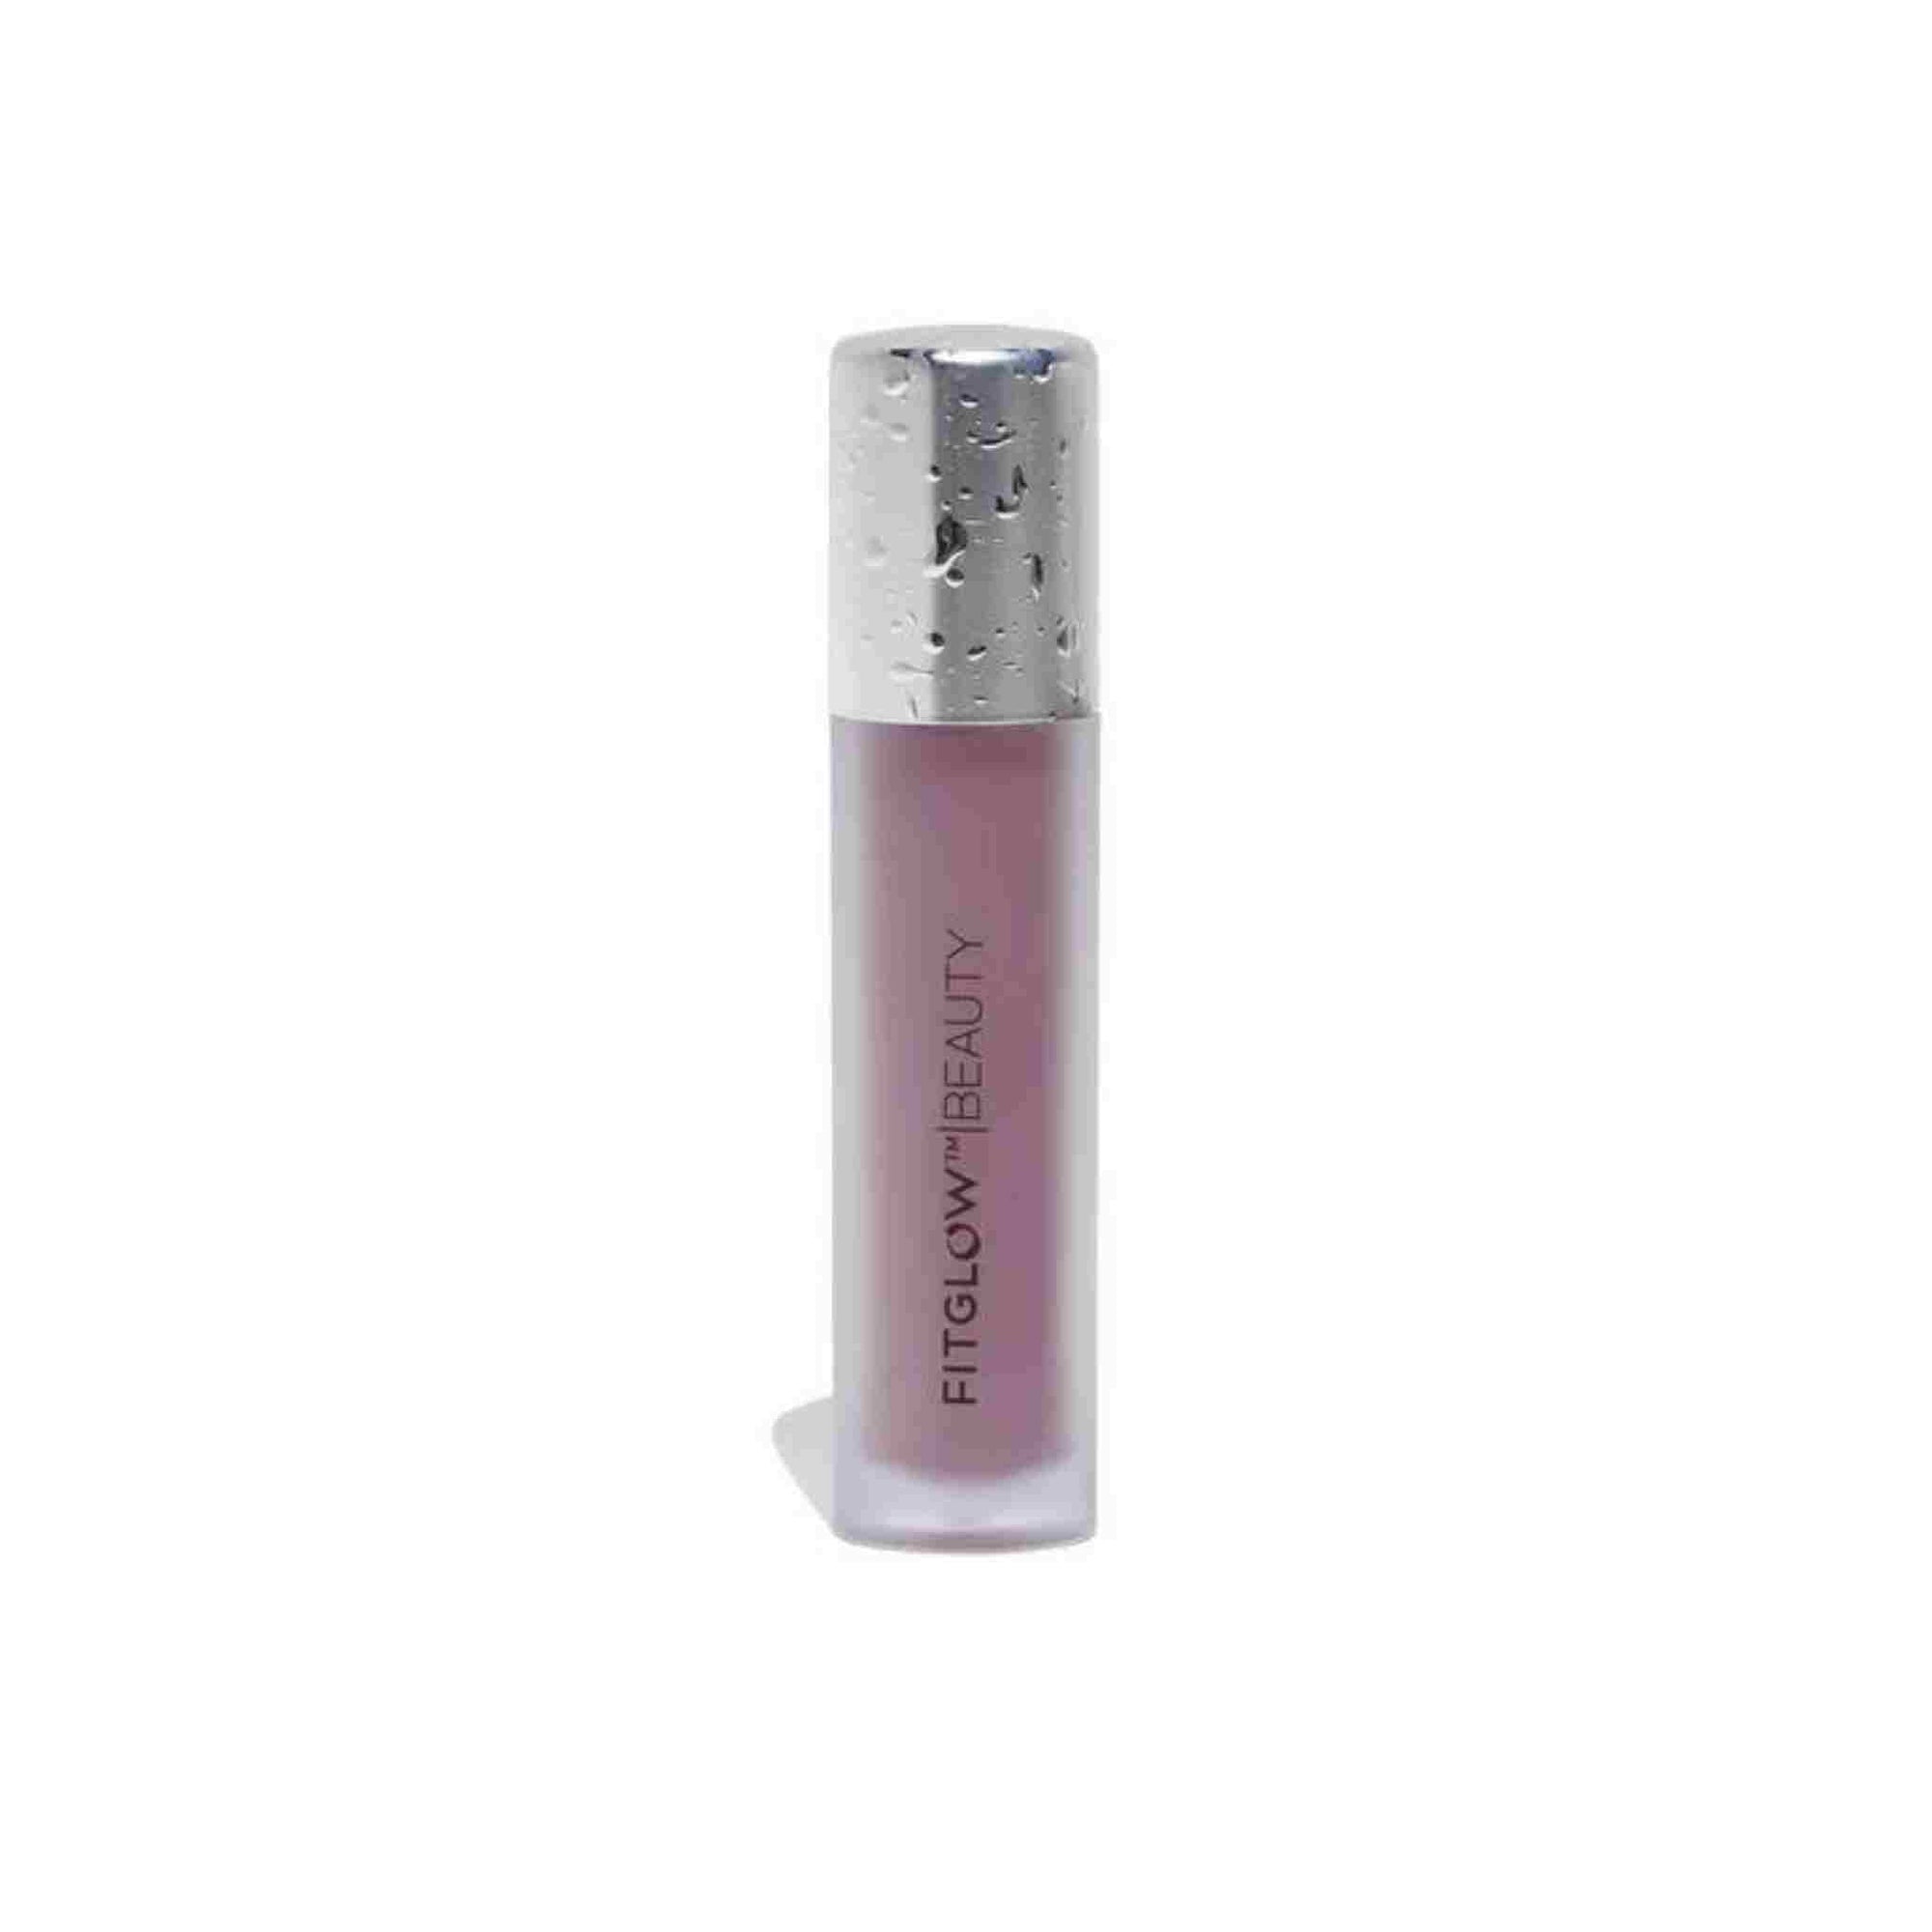 FitGlow Beauty - Fitglow Lip Colour Serum - Regal - ORESTA clean beauty simplified